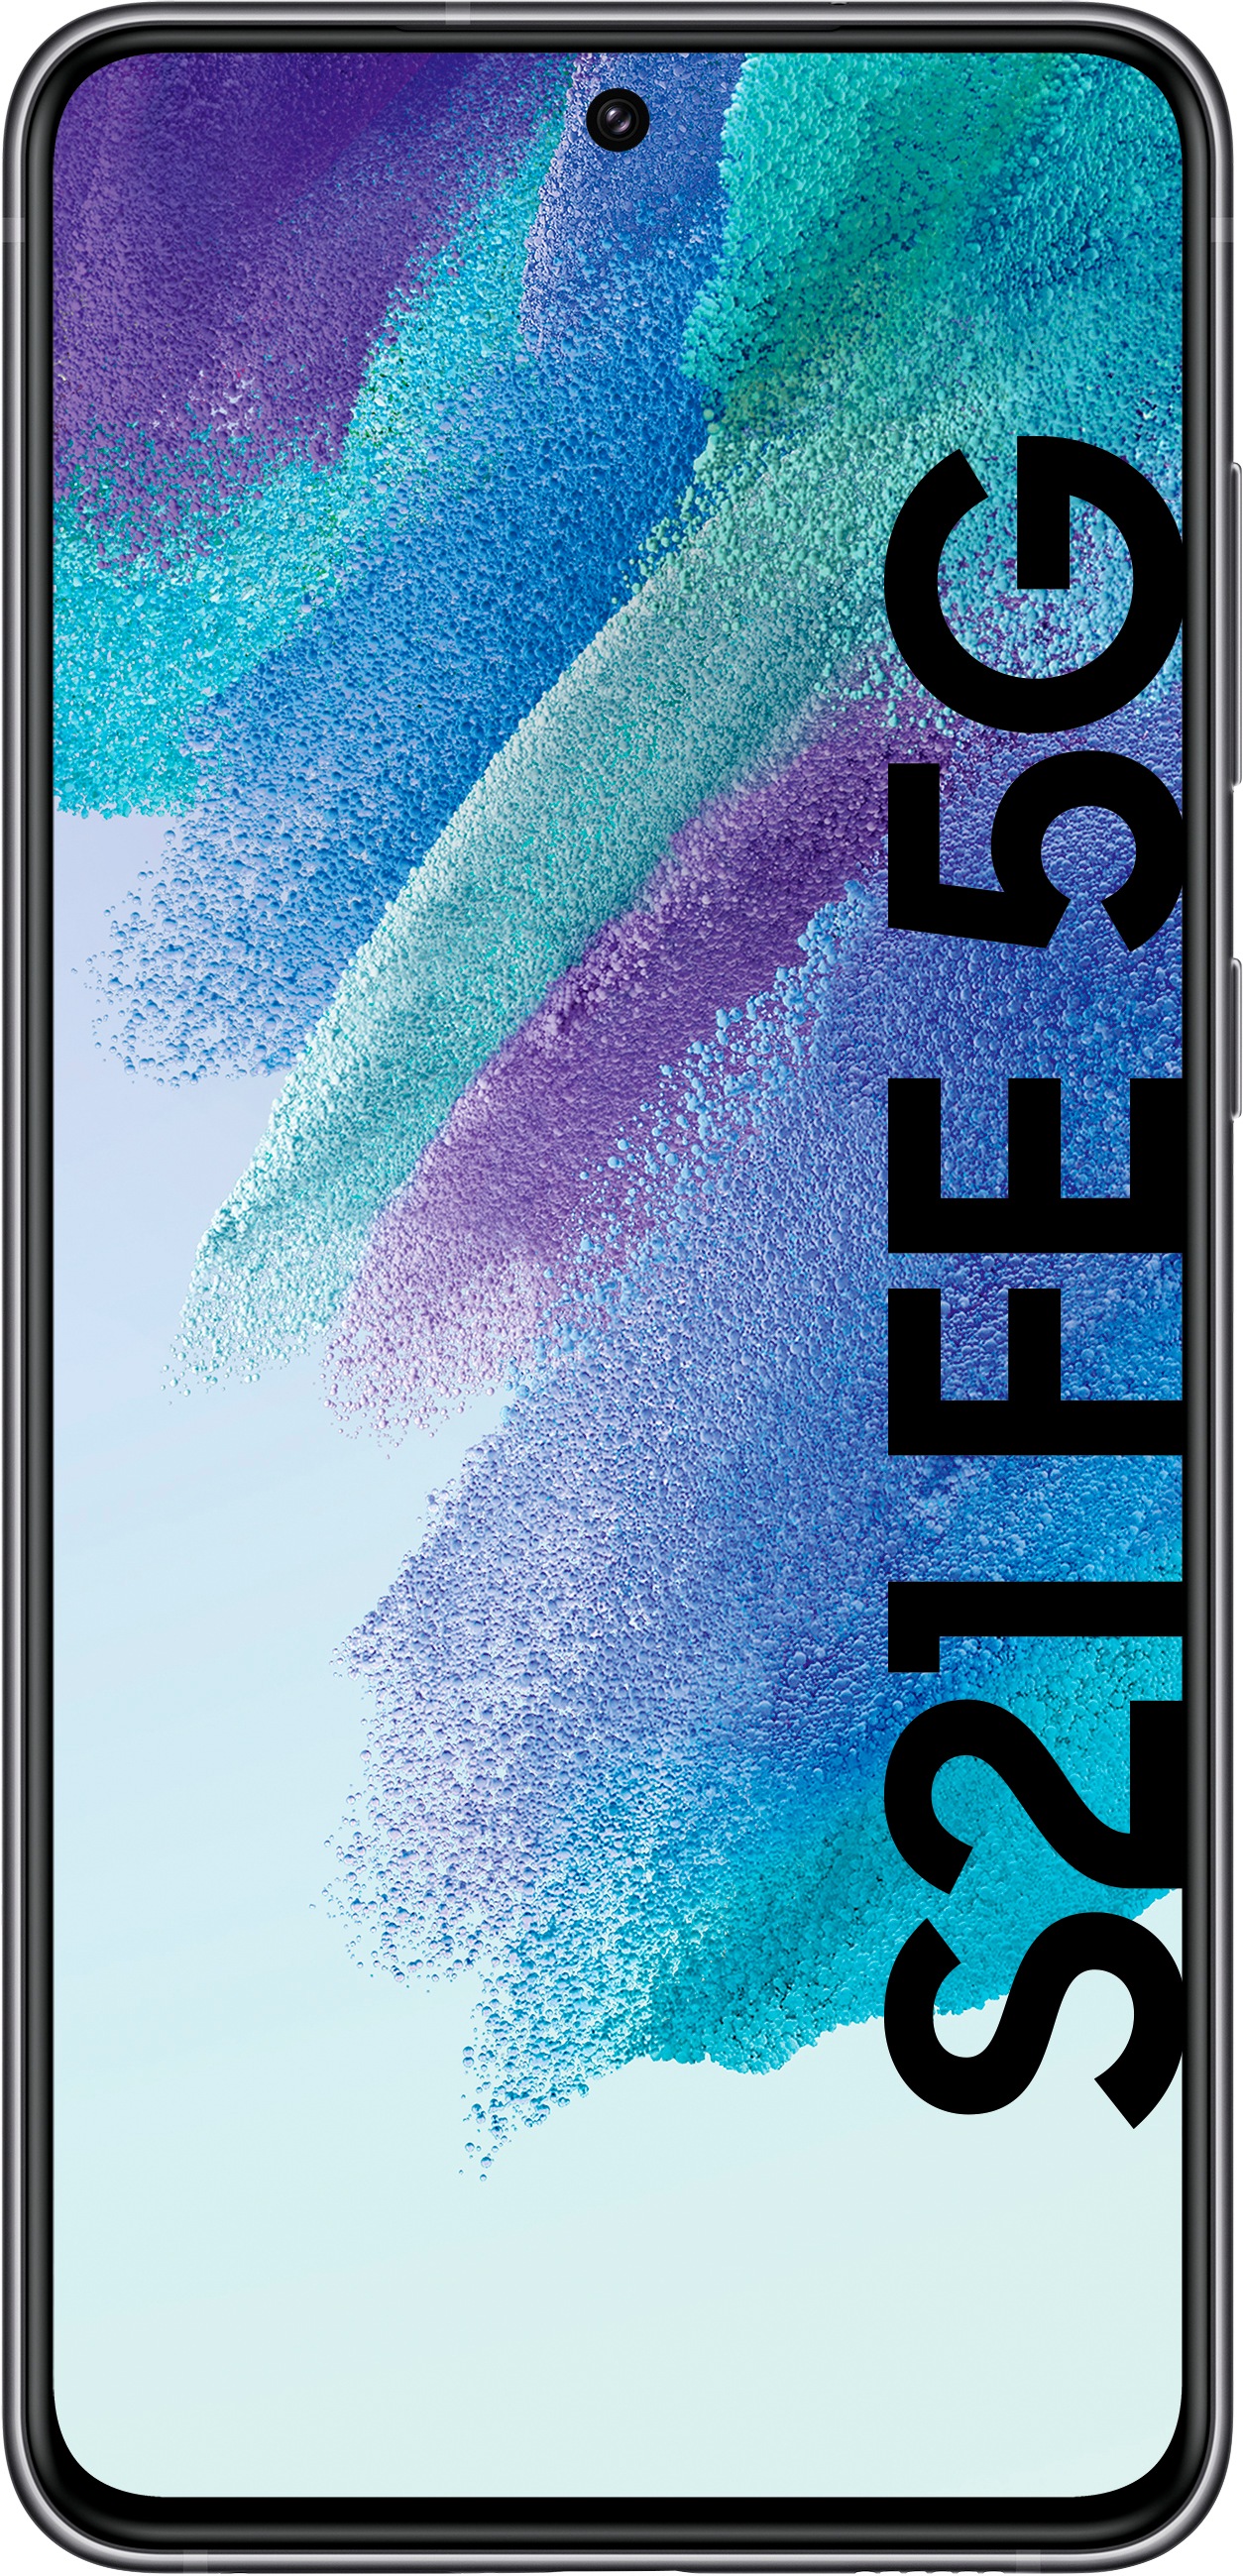 SAMSUNG Galaxy S21 FE 5G, 128 GB, Graphite